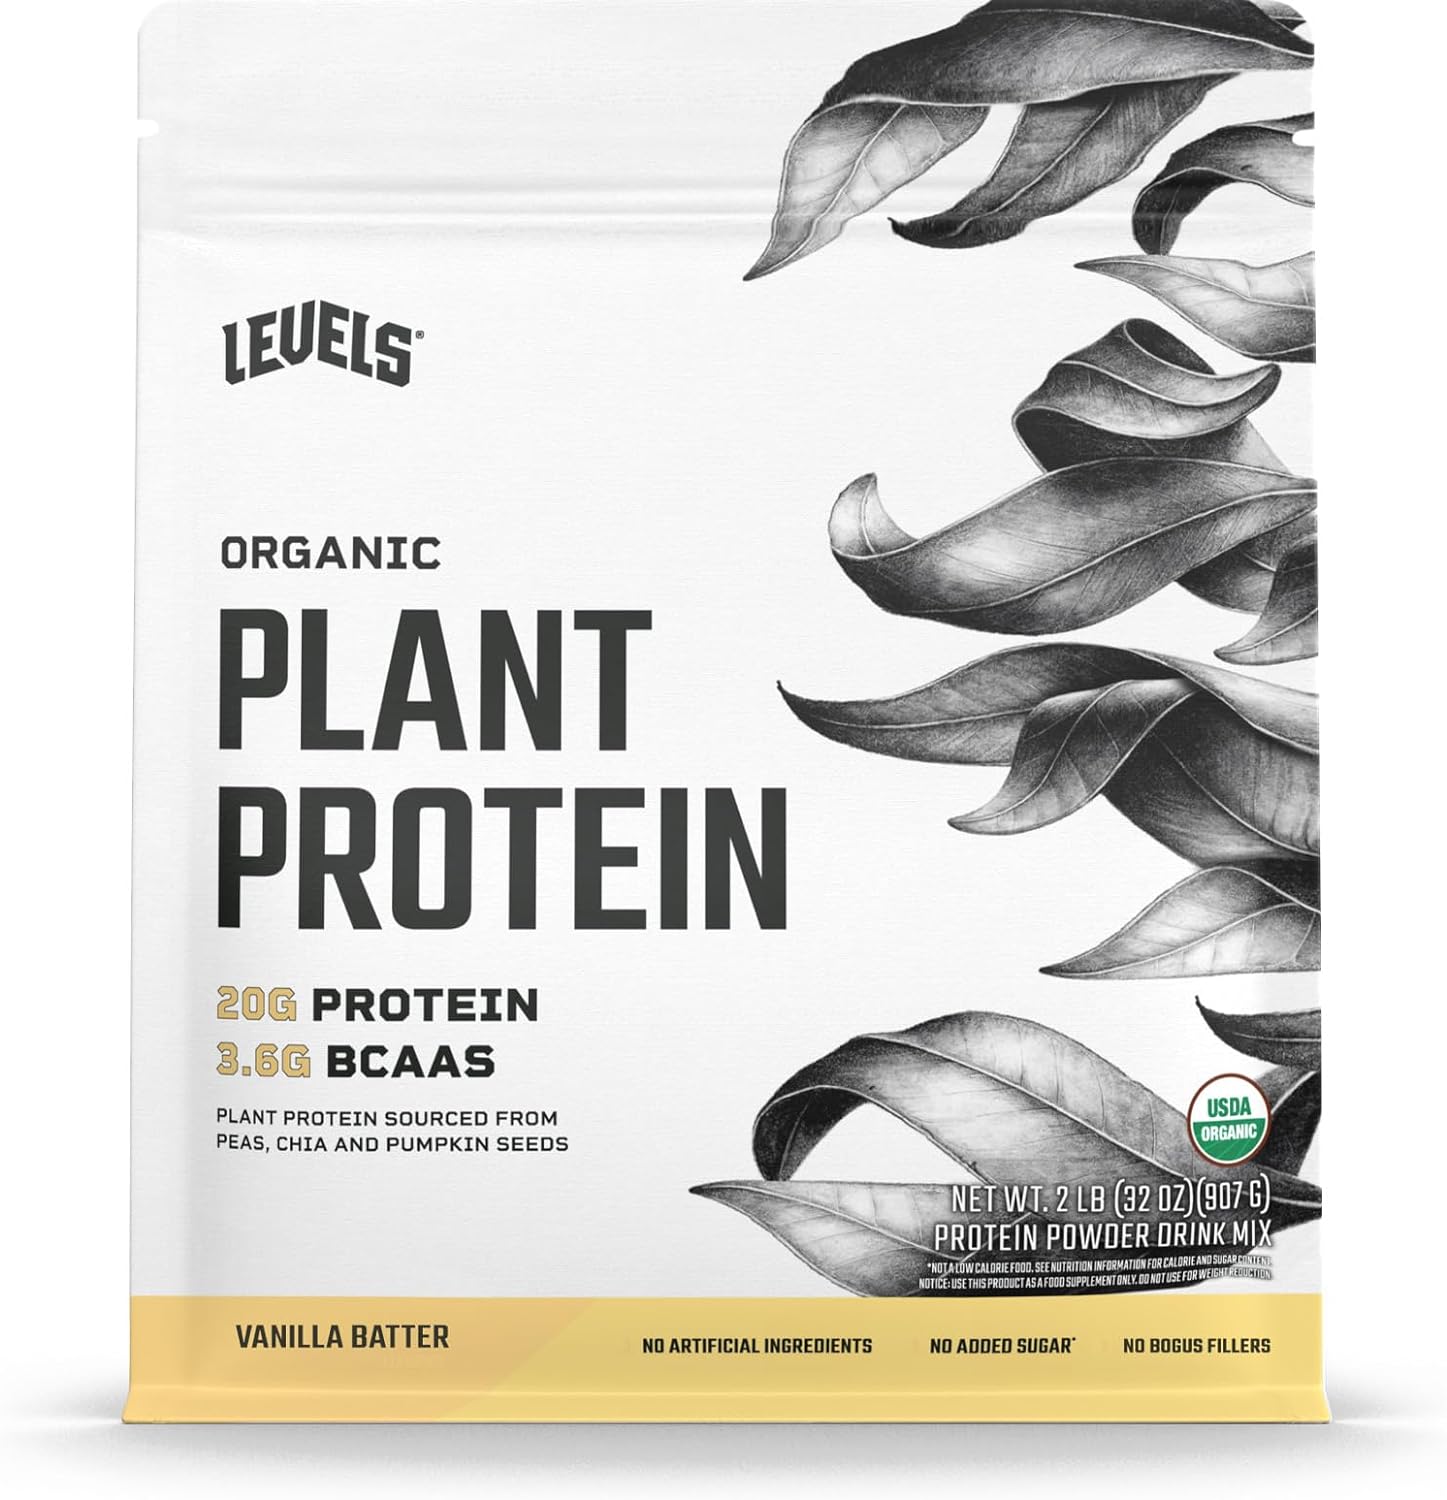 Levels Organic Plant Protein, 20G of Protein, No Artificials, Vanilla Batter, 2LB